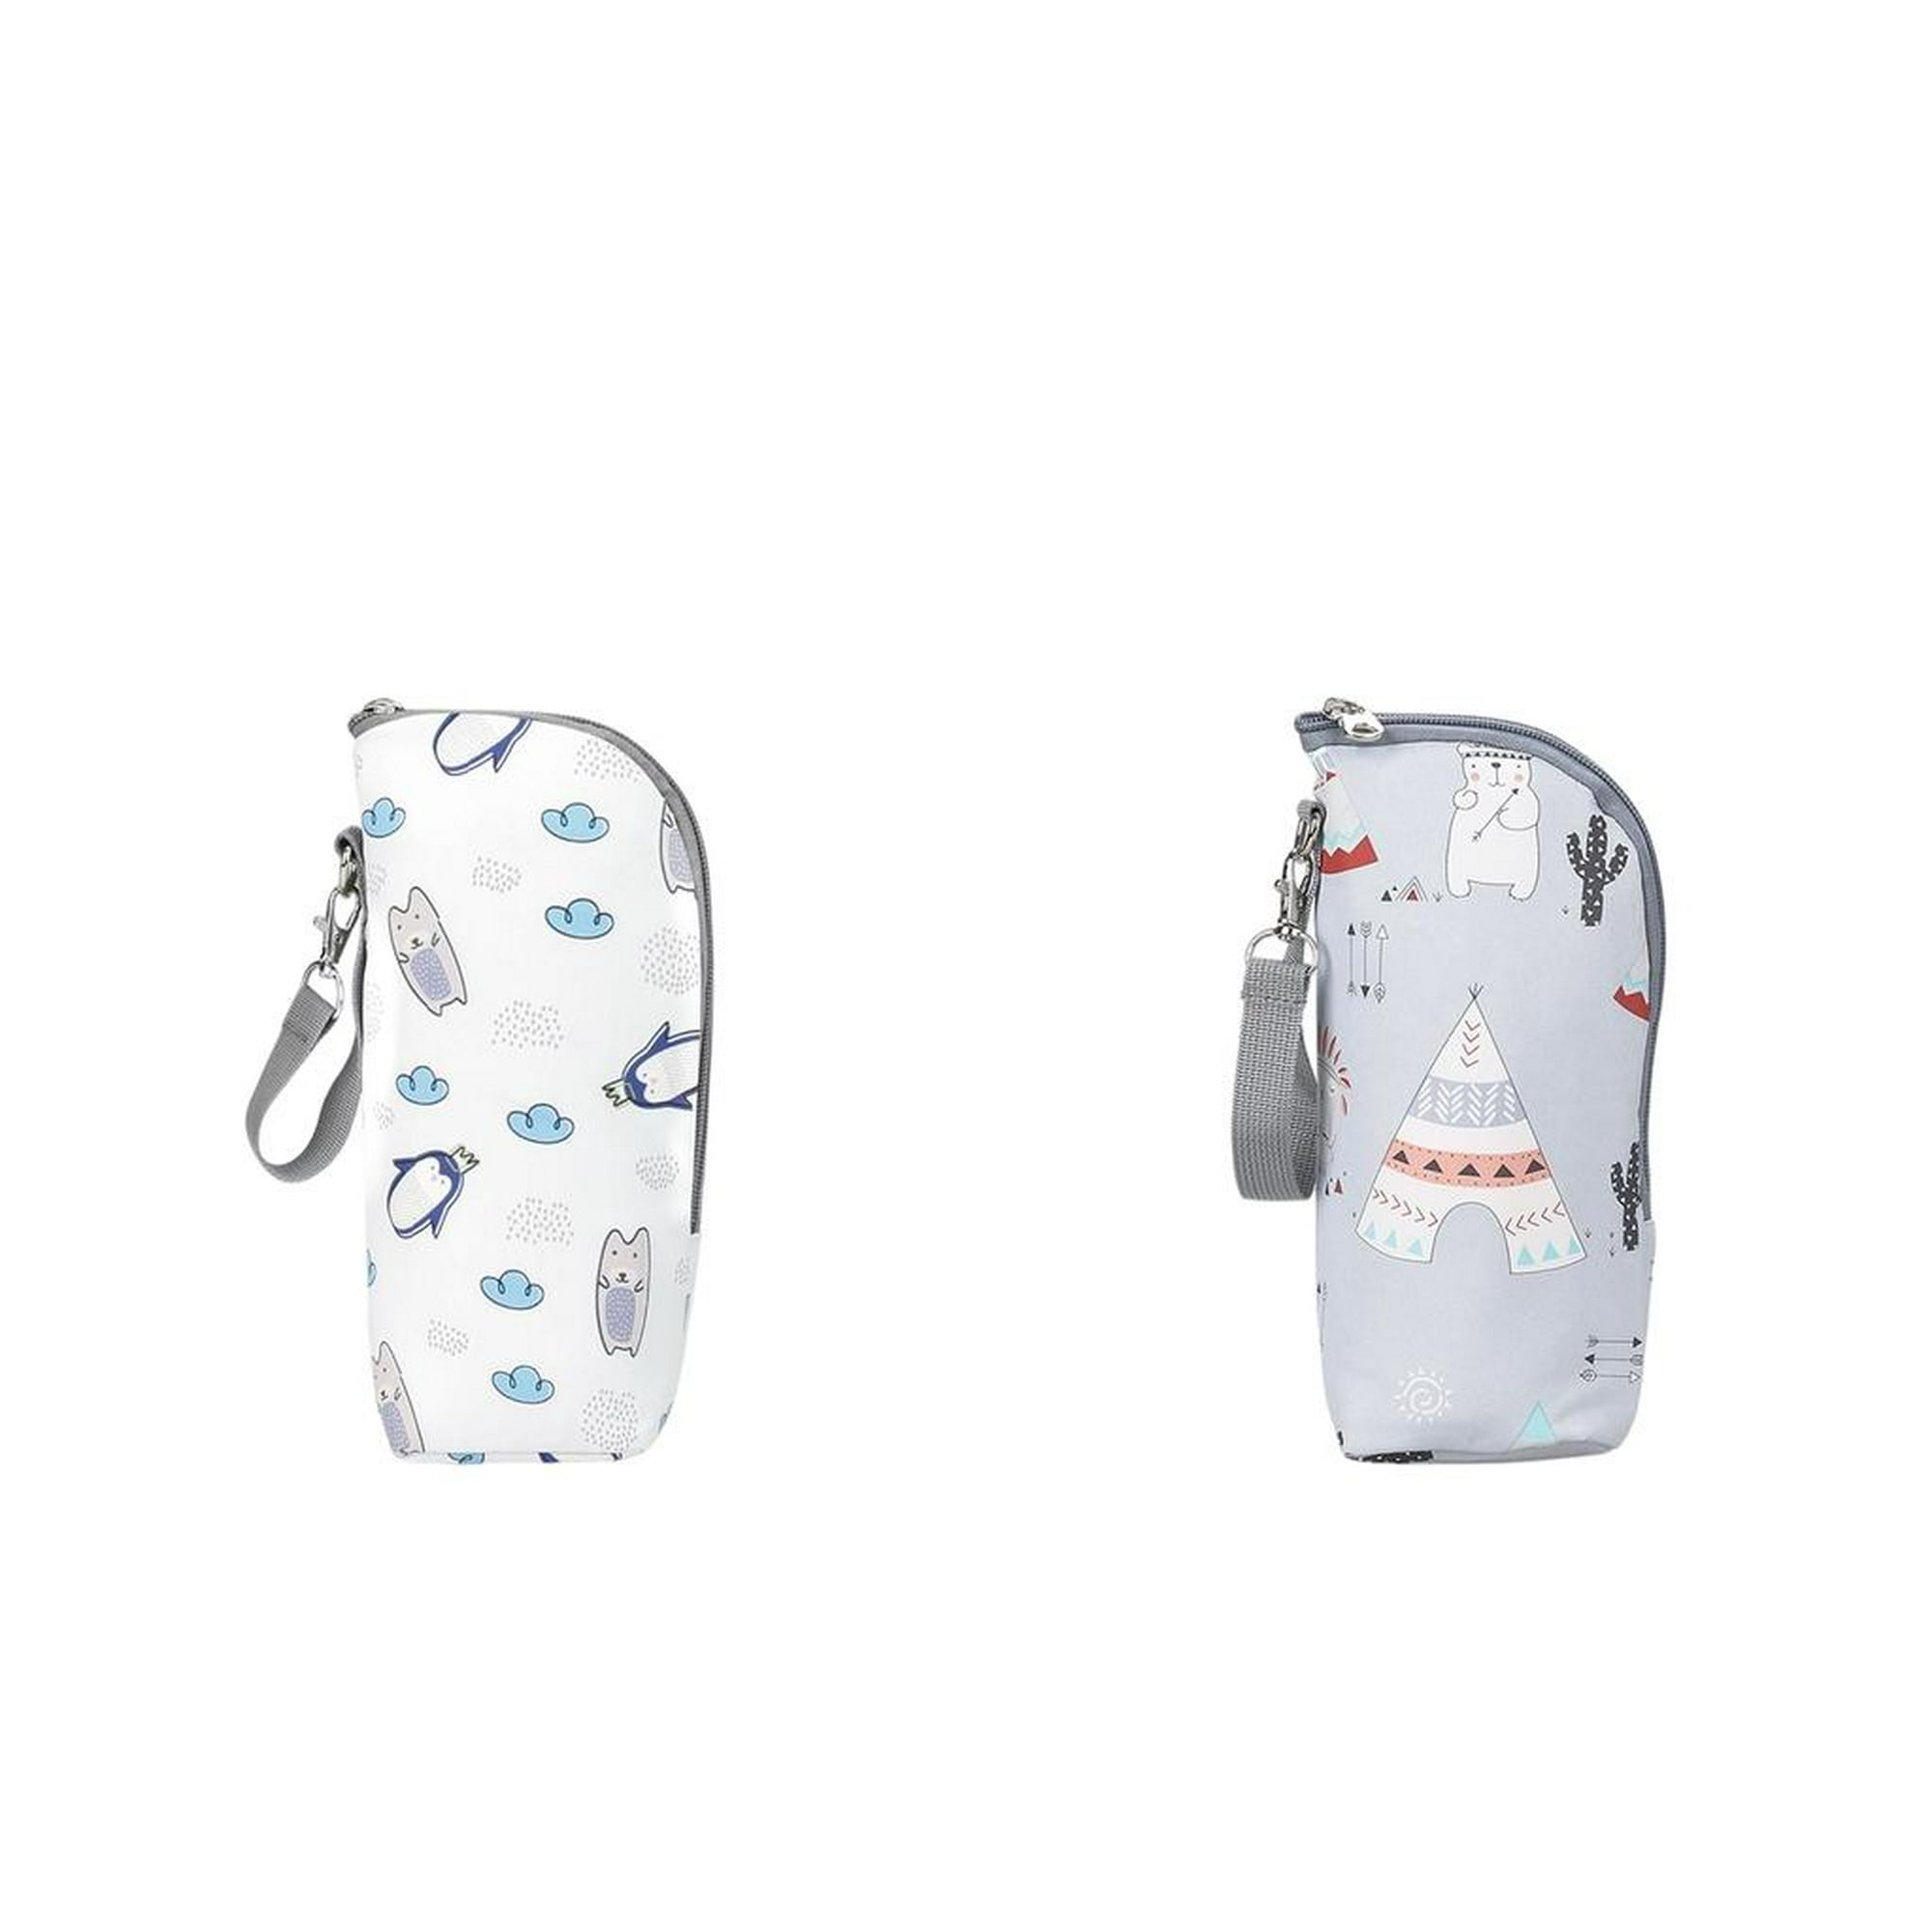  SOIMISS Bolsa térmica para botella de leche, bolsa calentadora  de botellas de leche, bolsa calentadora de biberones, bolsa de aislamiento  para carriola, versión coreana, bolsa térmica para biberones marrón bebé, 3